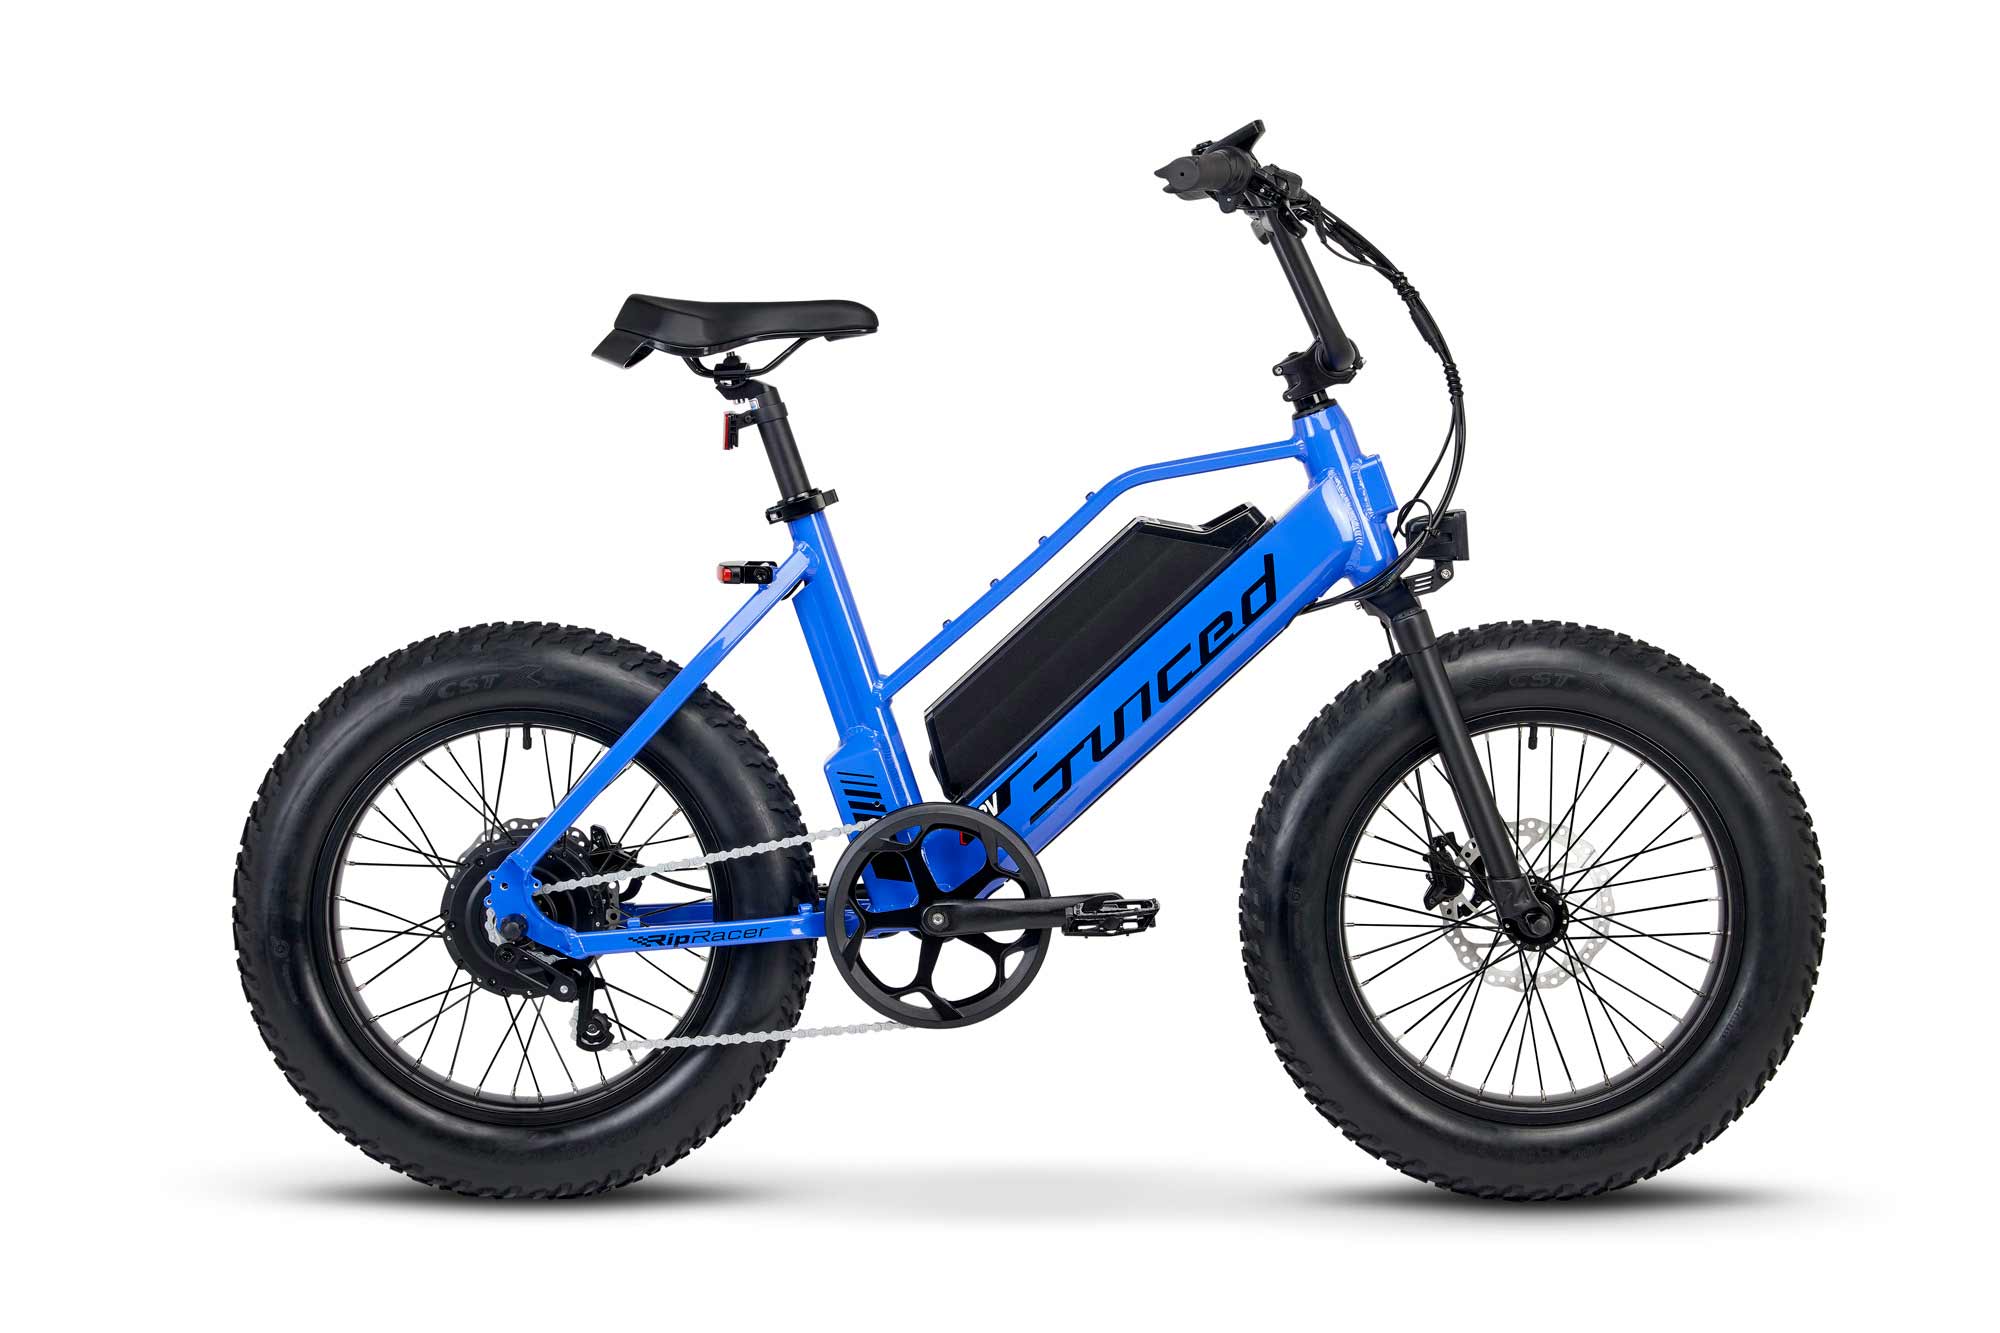 RipRacer: Fun Sized Fat-Tire E-Bike by Juiced Bikes